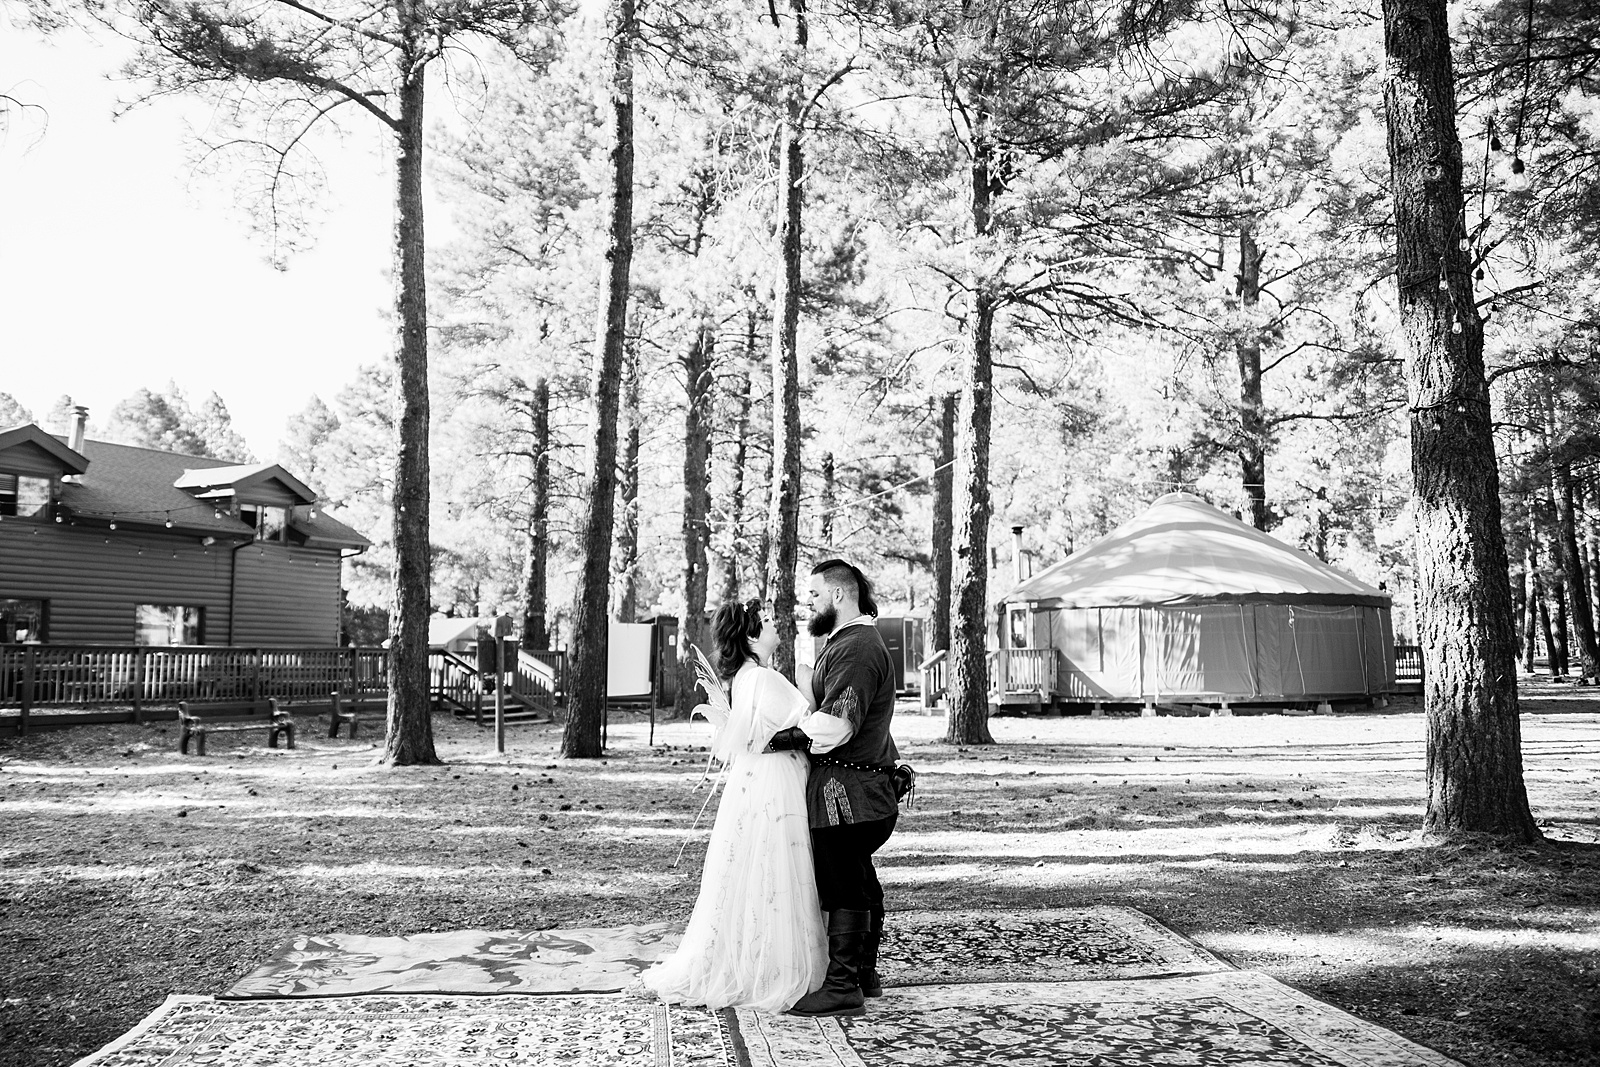 Newlyweds sharing first dance at their Arizona Nordic Village wedding reception by Arizona wedding photographer PMA Photography.